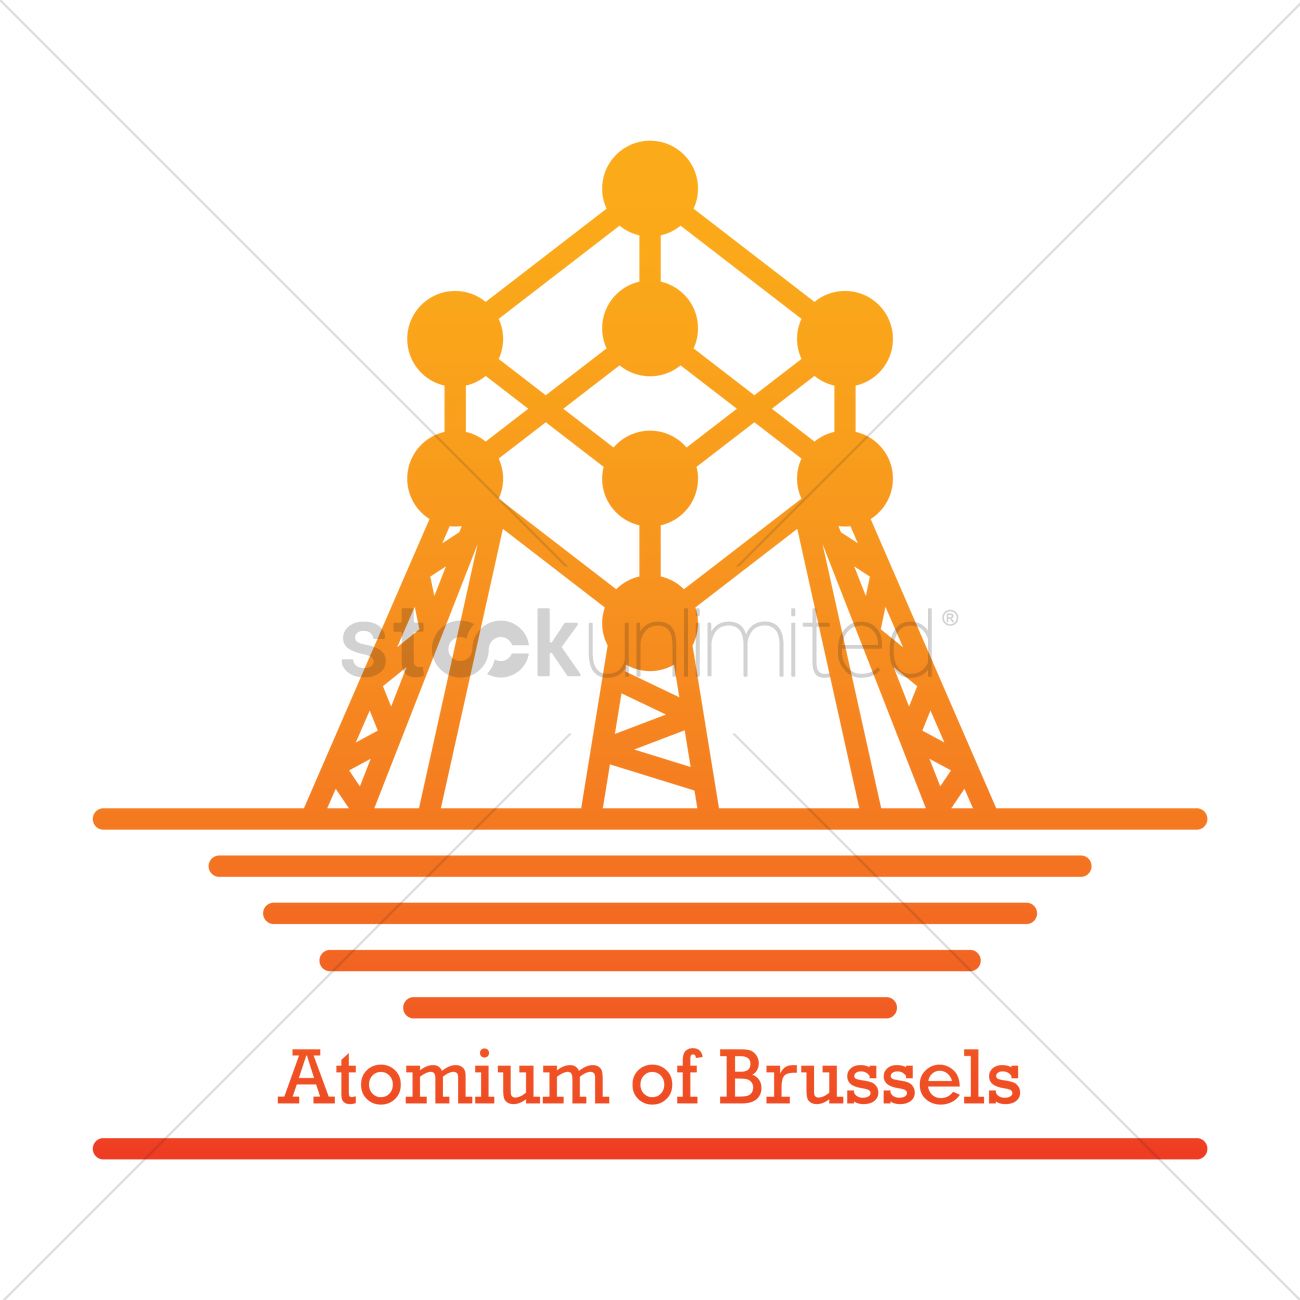 Atomium of brussels Vector Image.